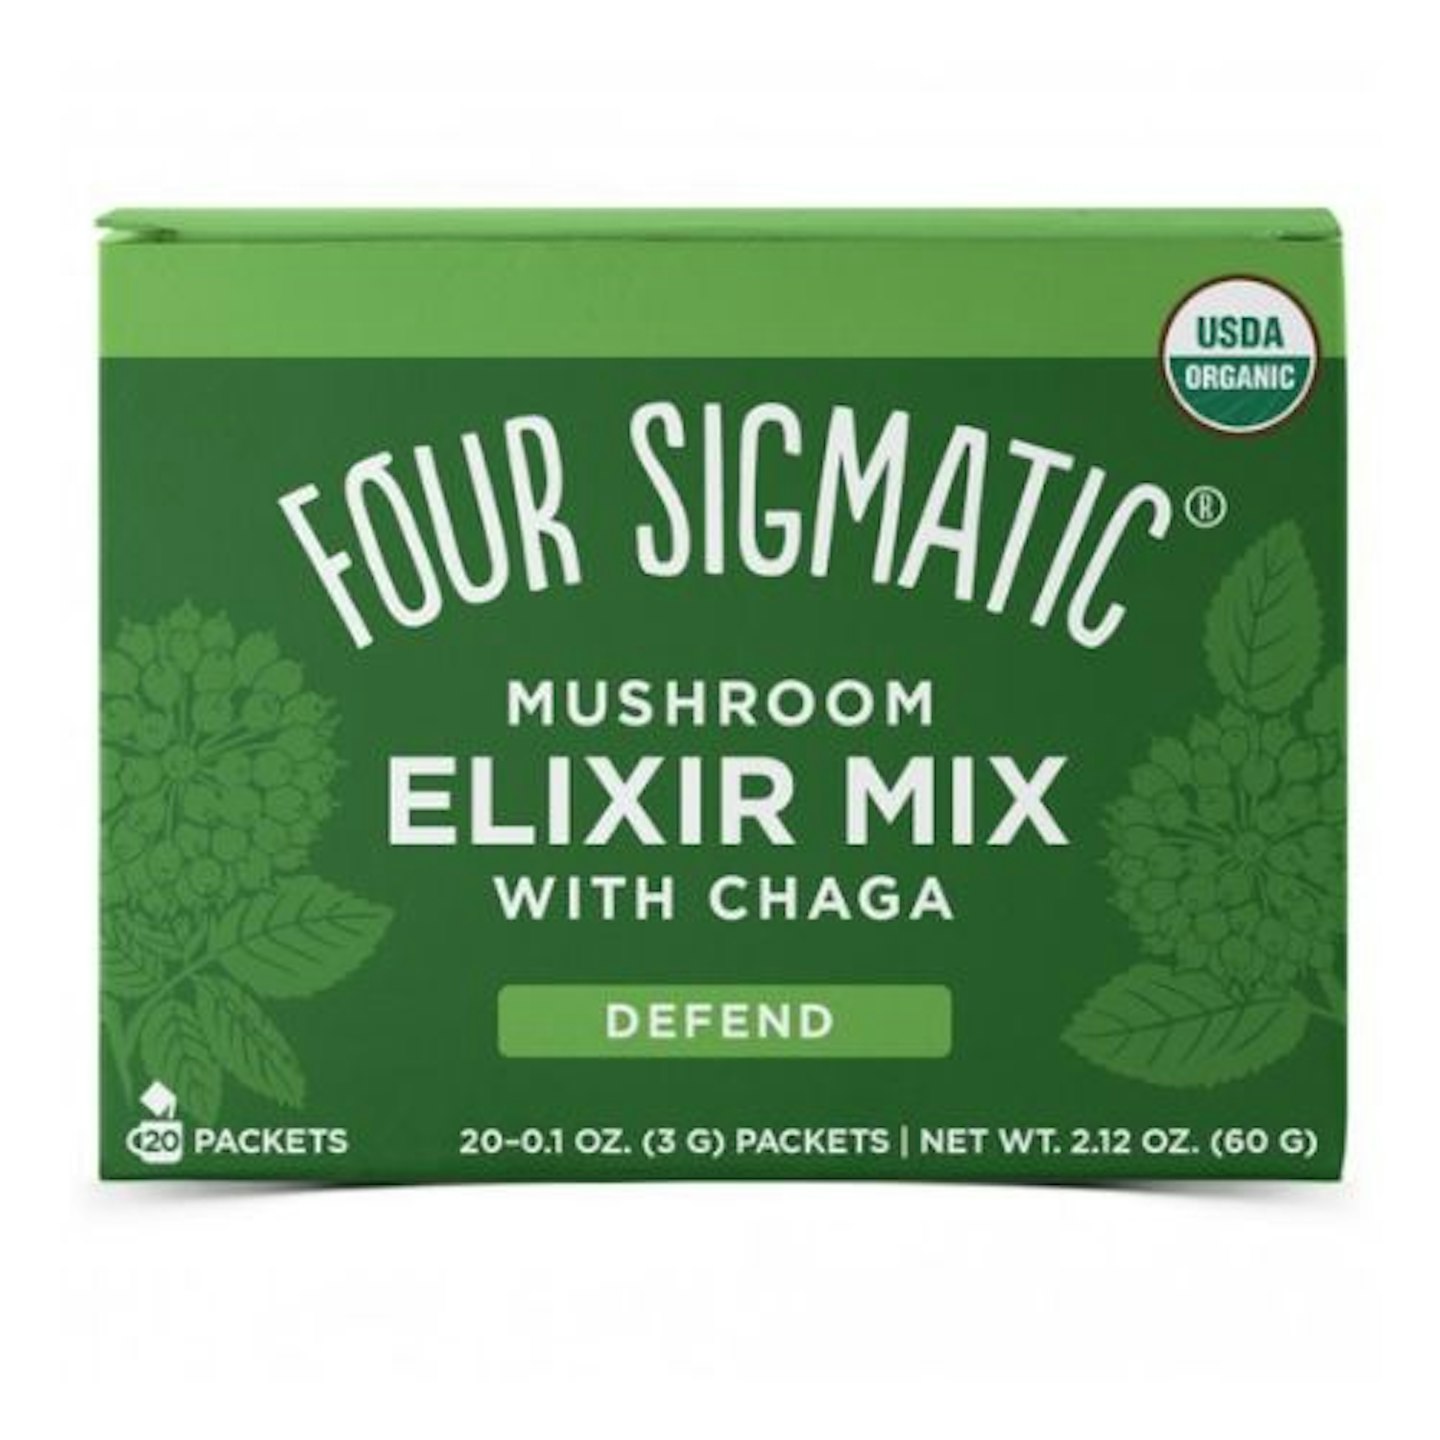 Four Sigmatic Organic Chaga Mushroom Elixir Mix